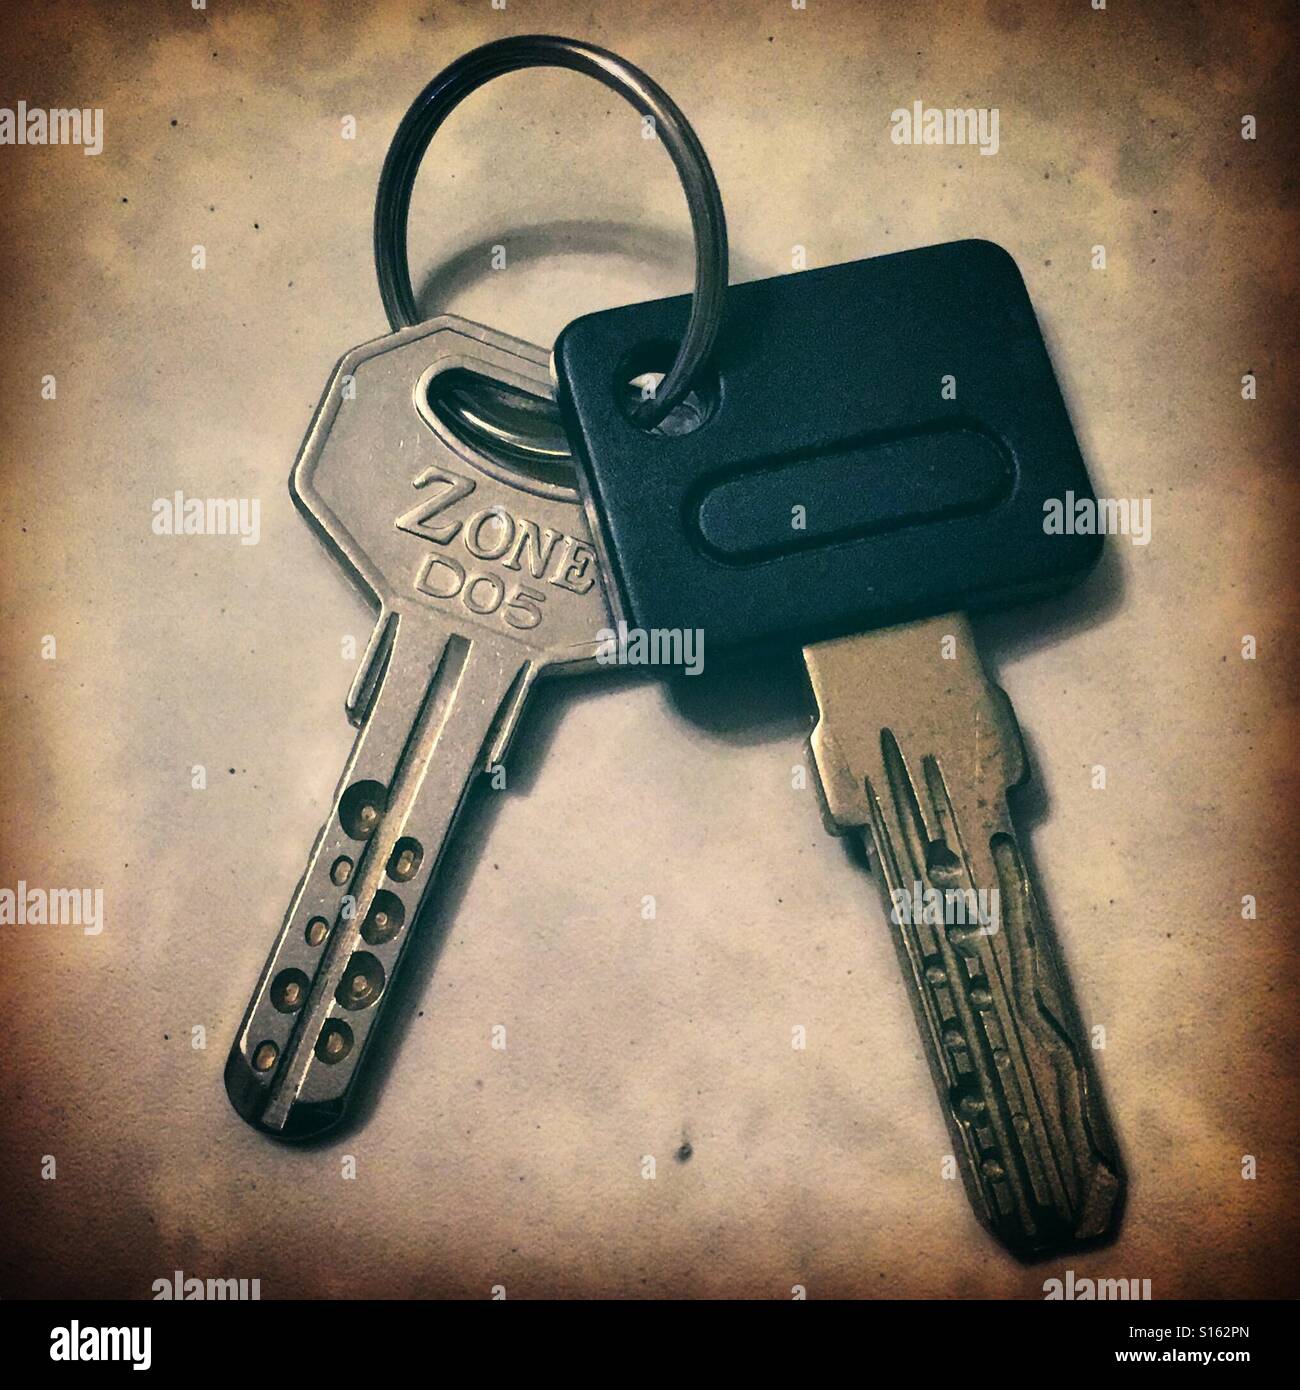 Two keys Stock Photo